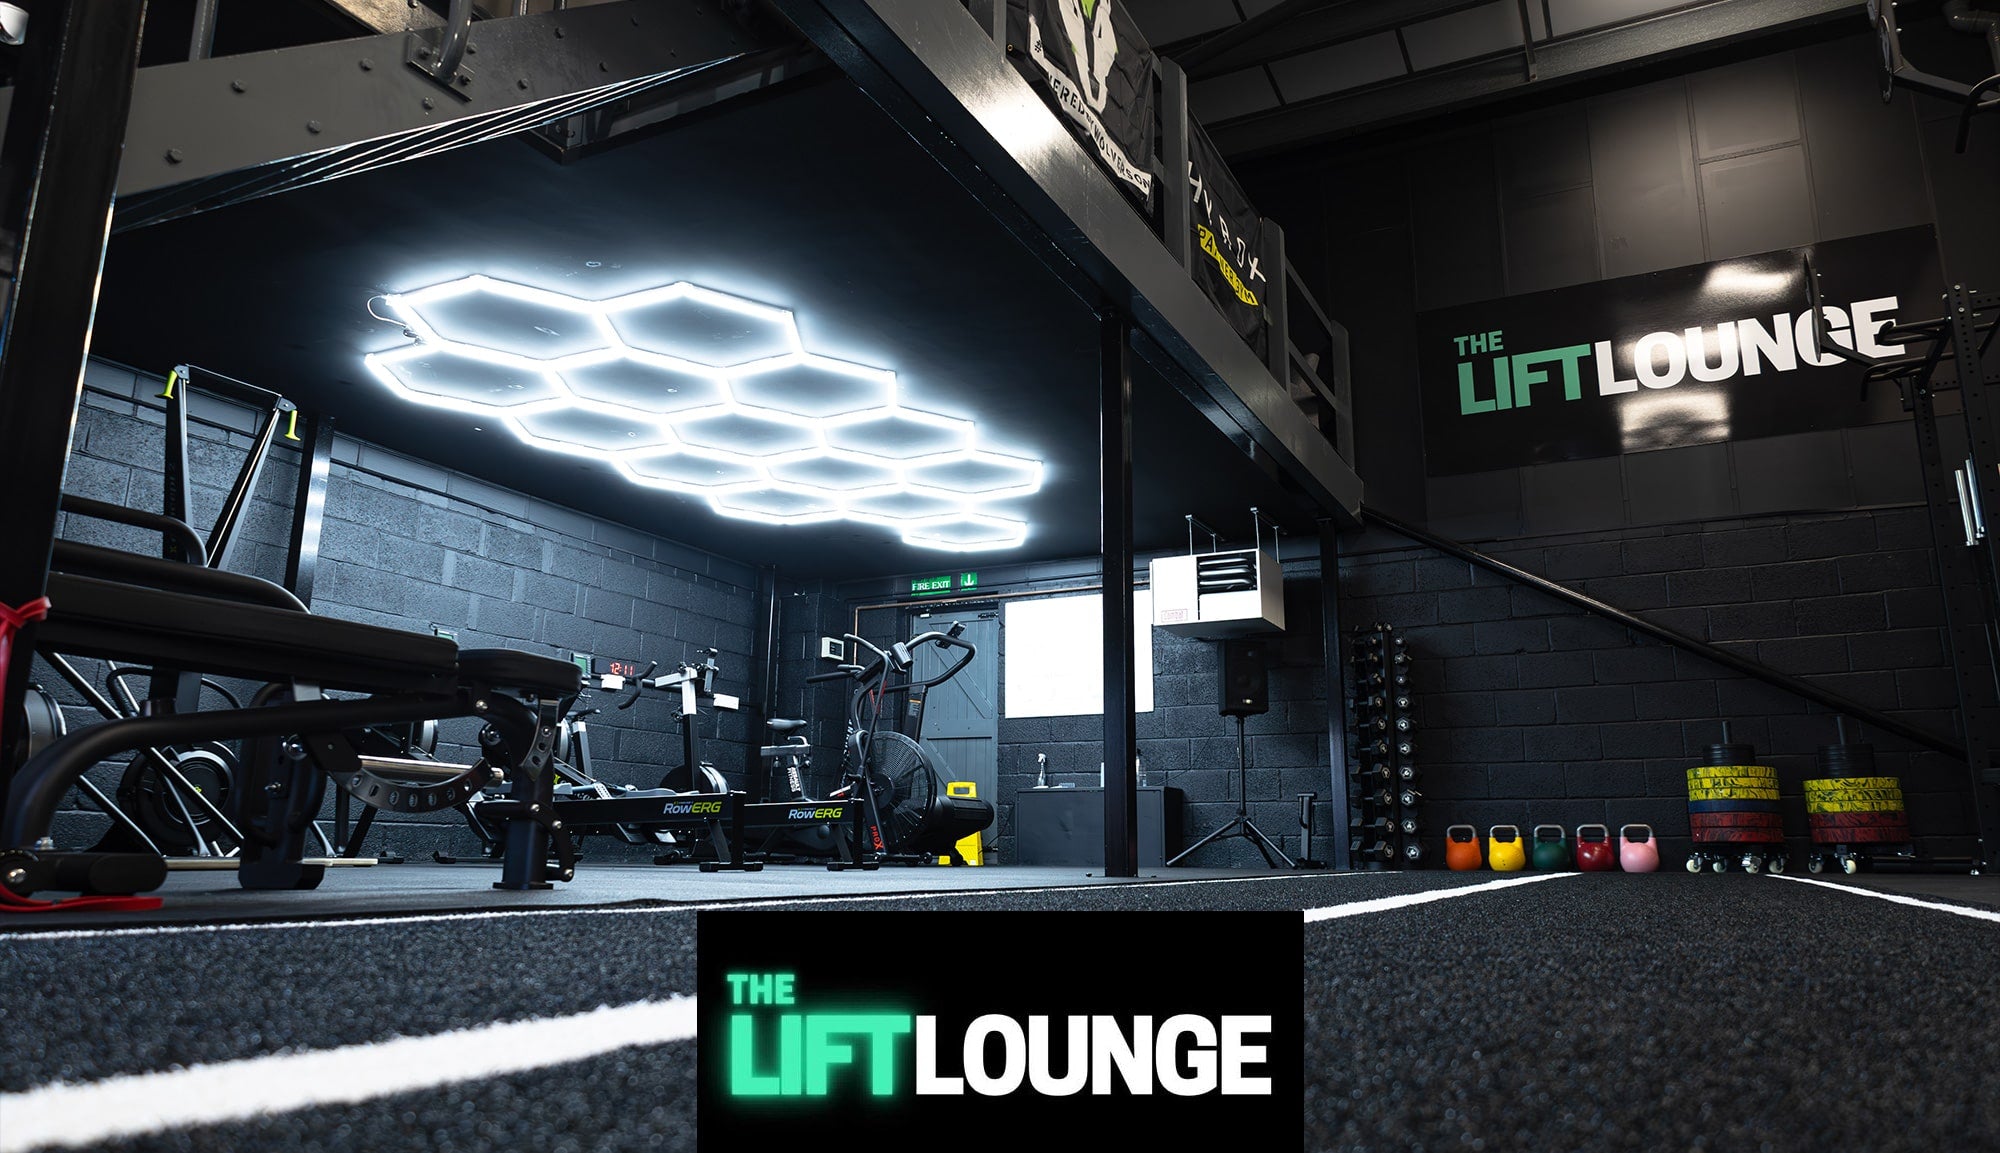 The Lift Lounge